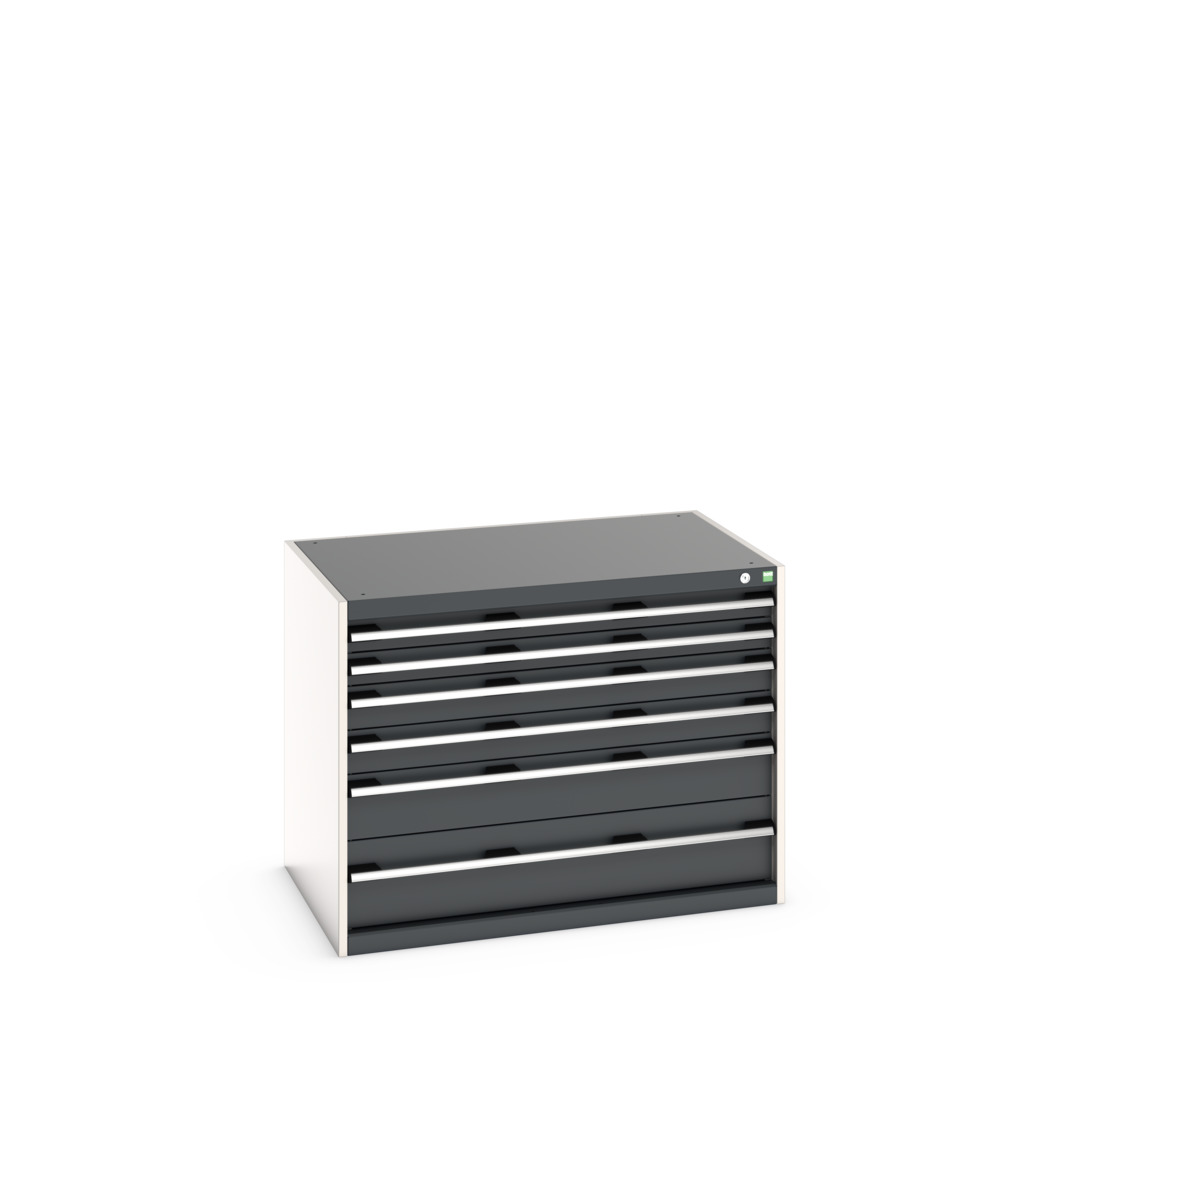 40029086. - cubio drawer cabinet